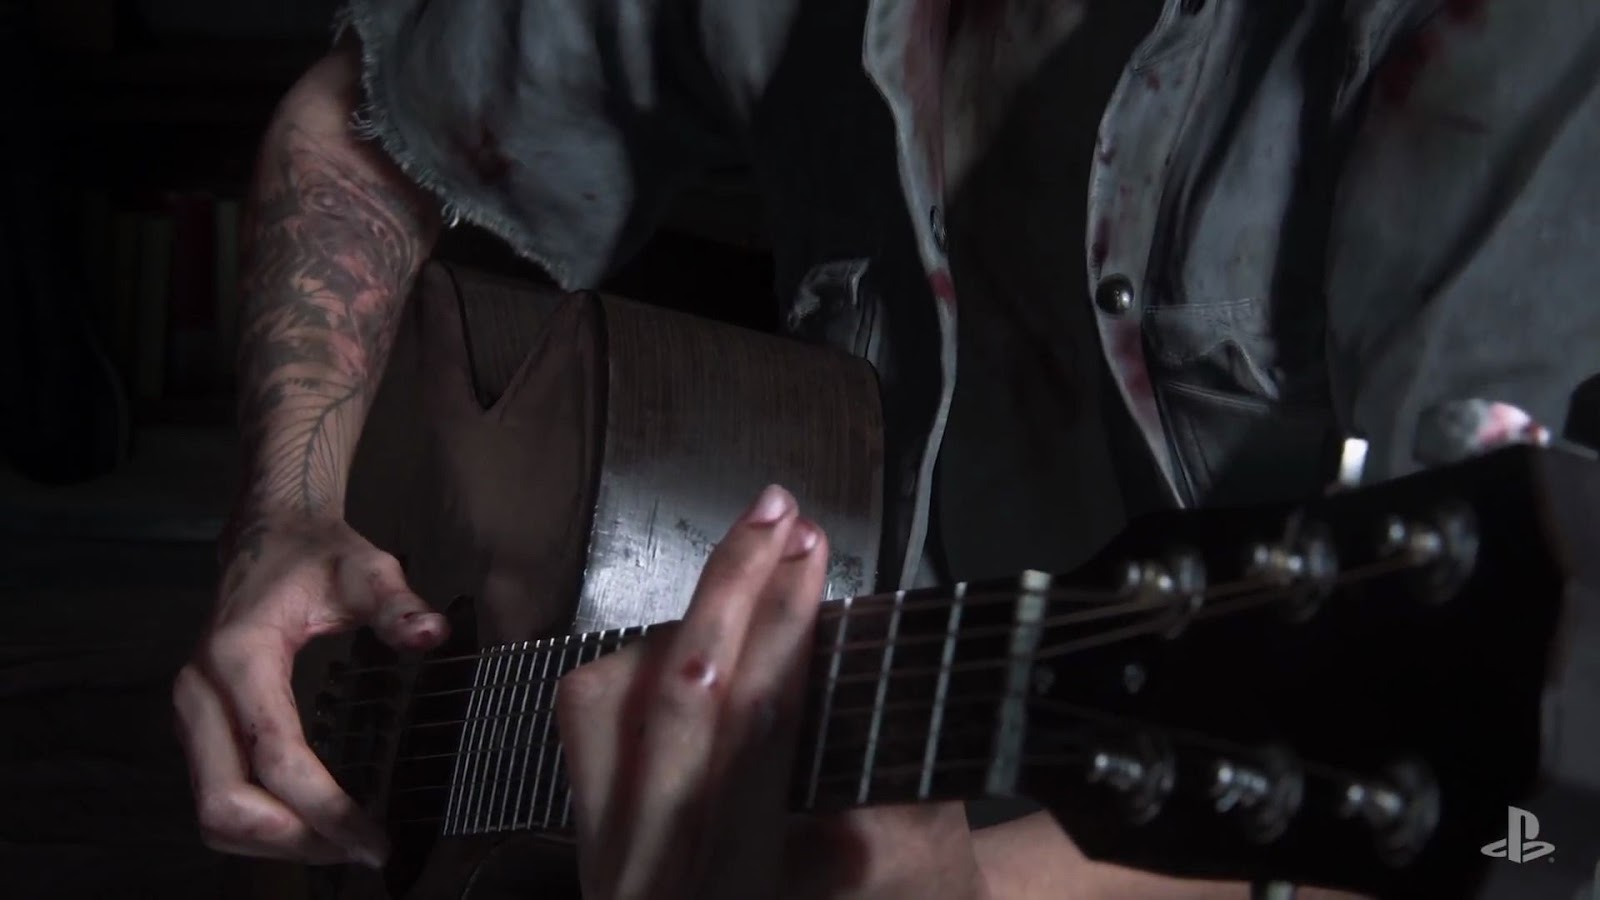 Qué significa el tatuaje de Ellie en The Last of Us?